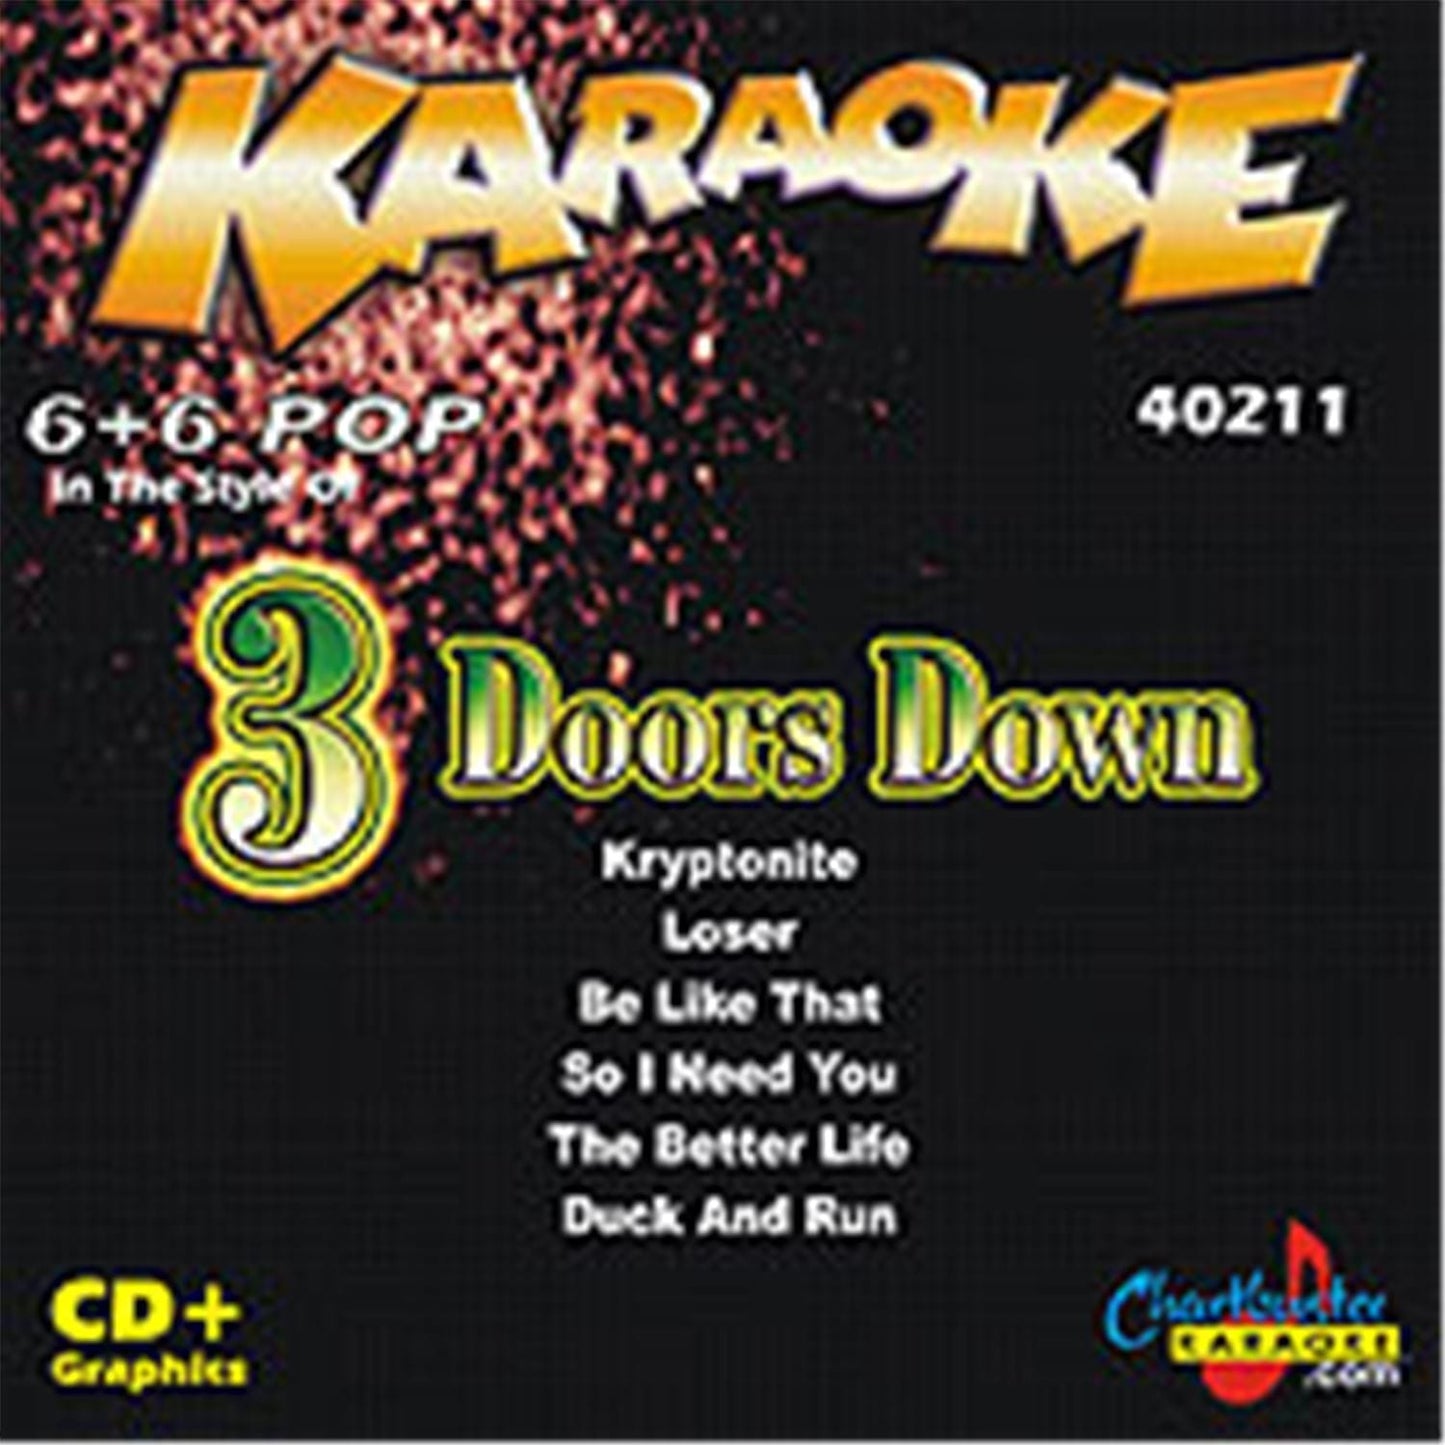 Chartbuster Karaoke Pop Artist 3 Doors Down - ProSound and Stage Lighting